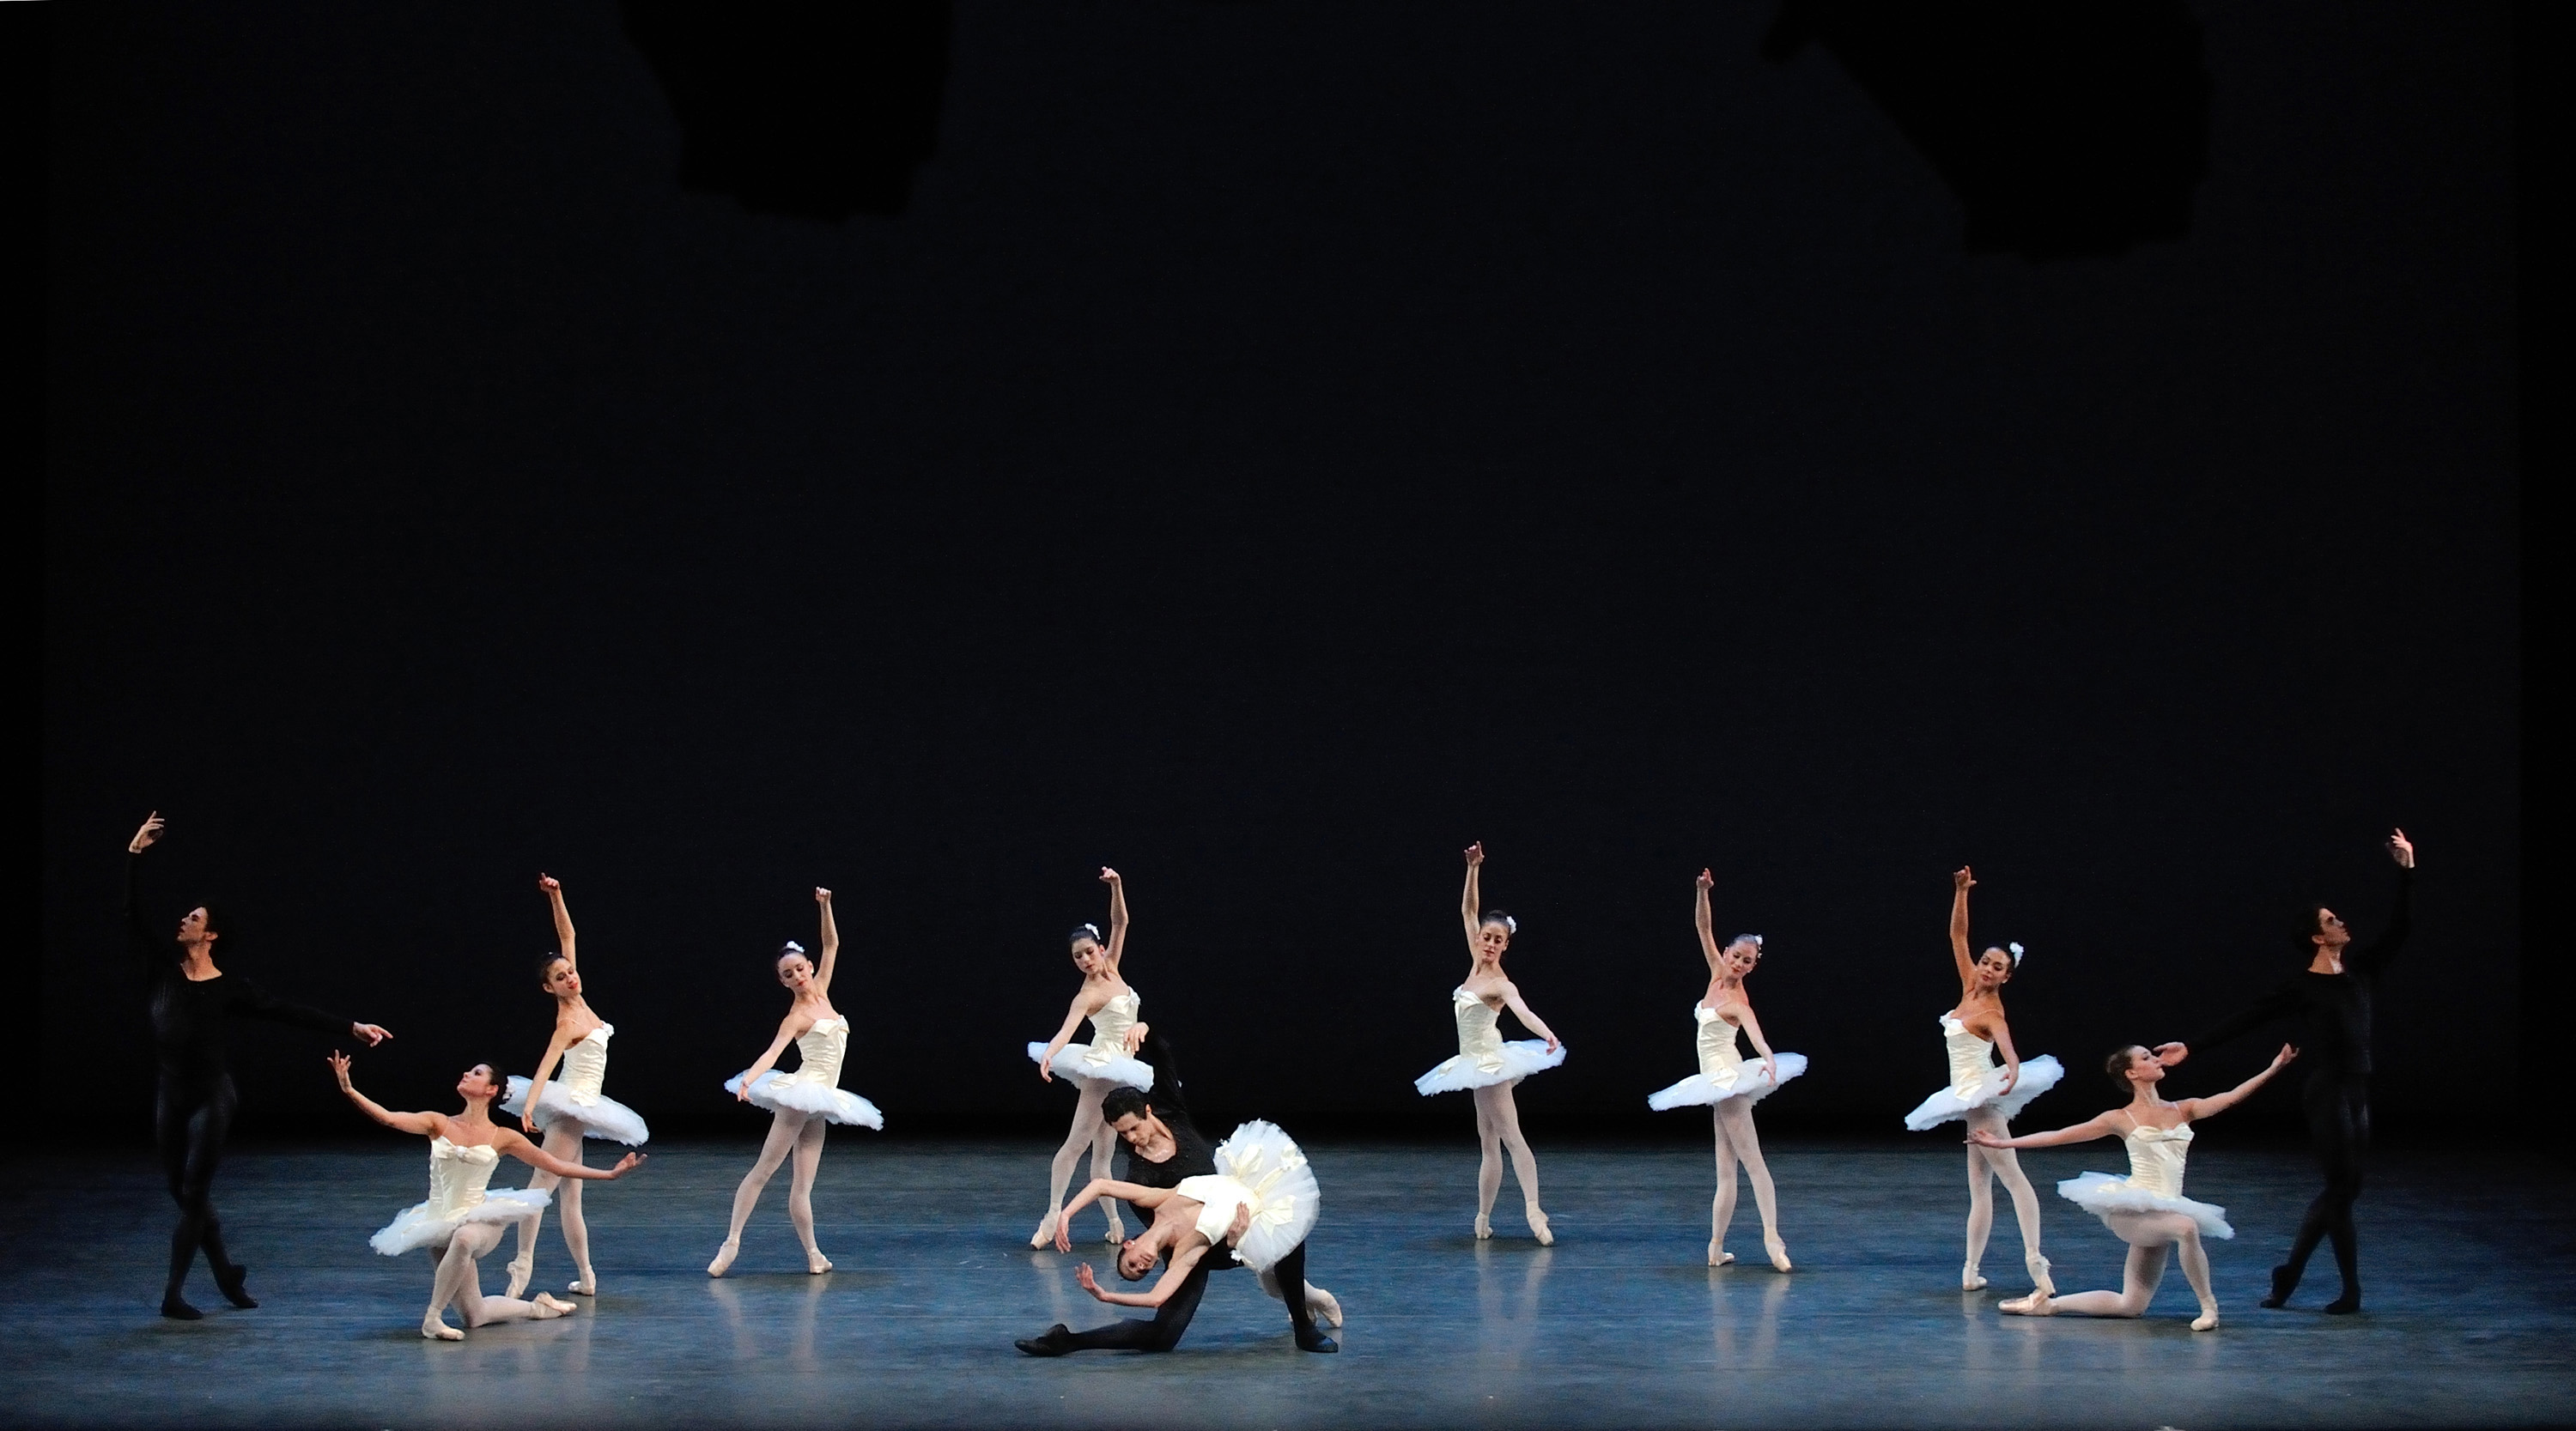 American Ballet Theatre 